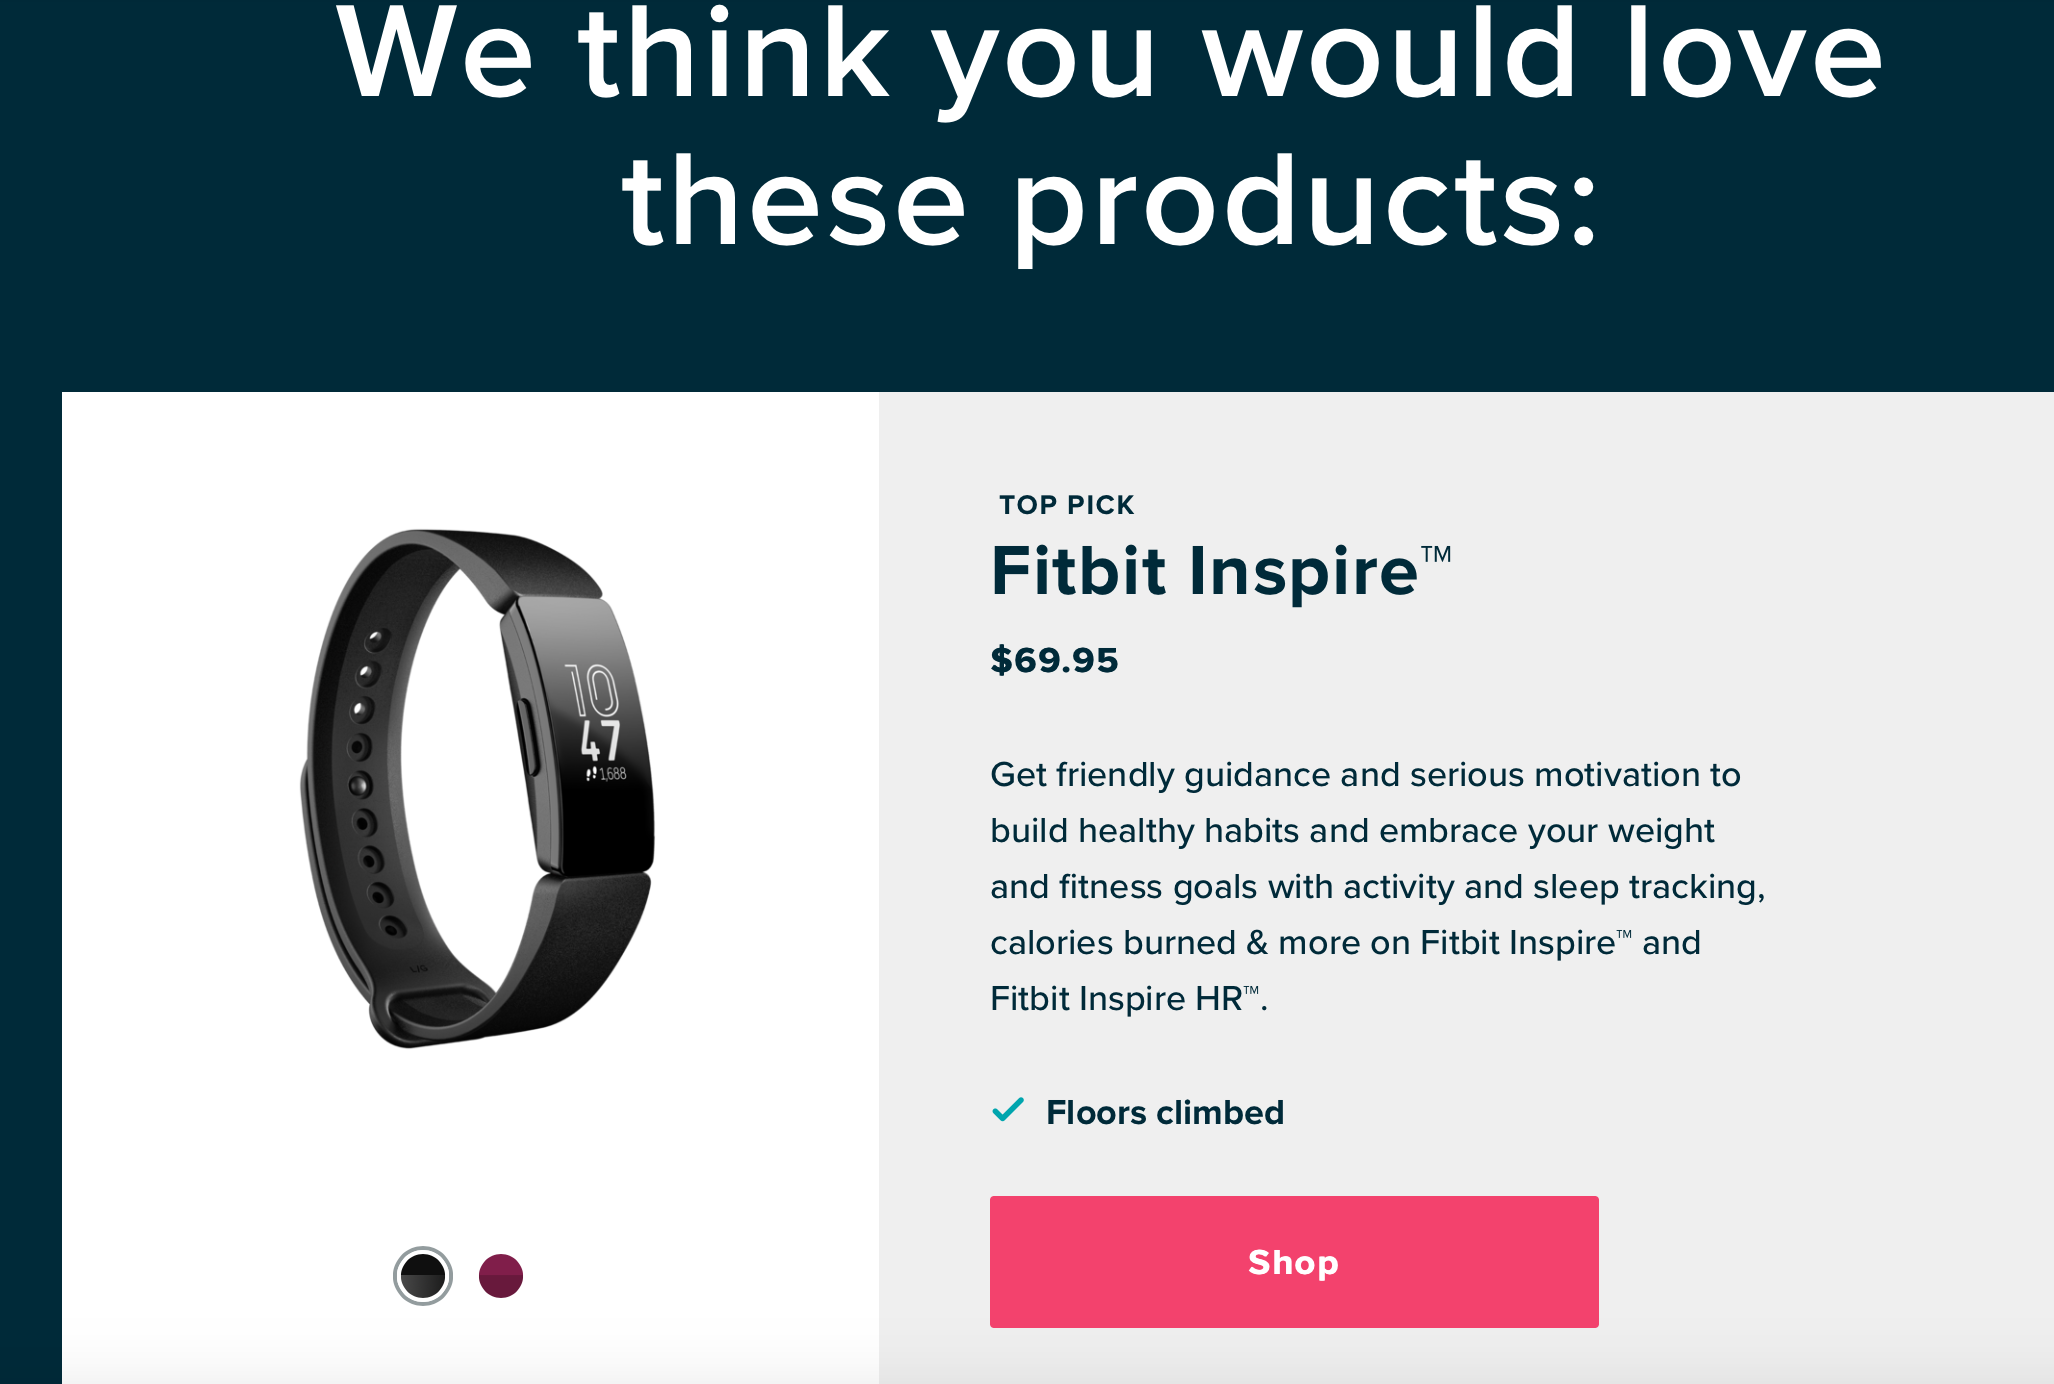 Inspire HR count floors? - Fitbit Community